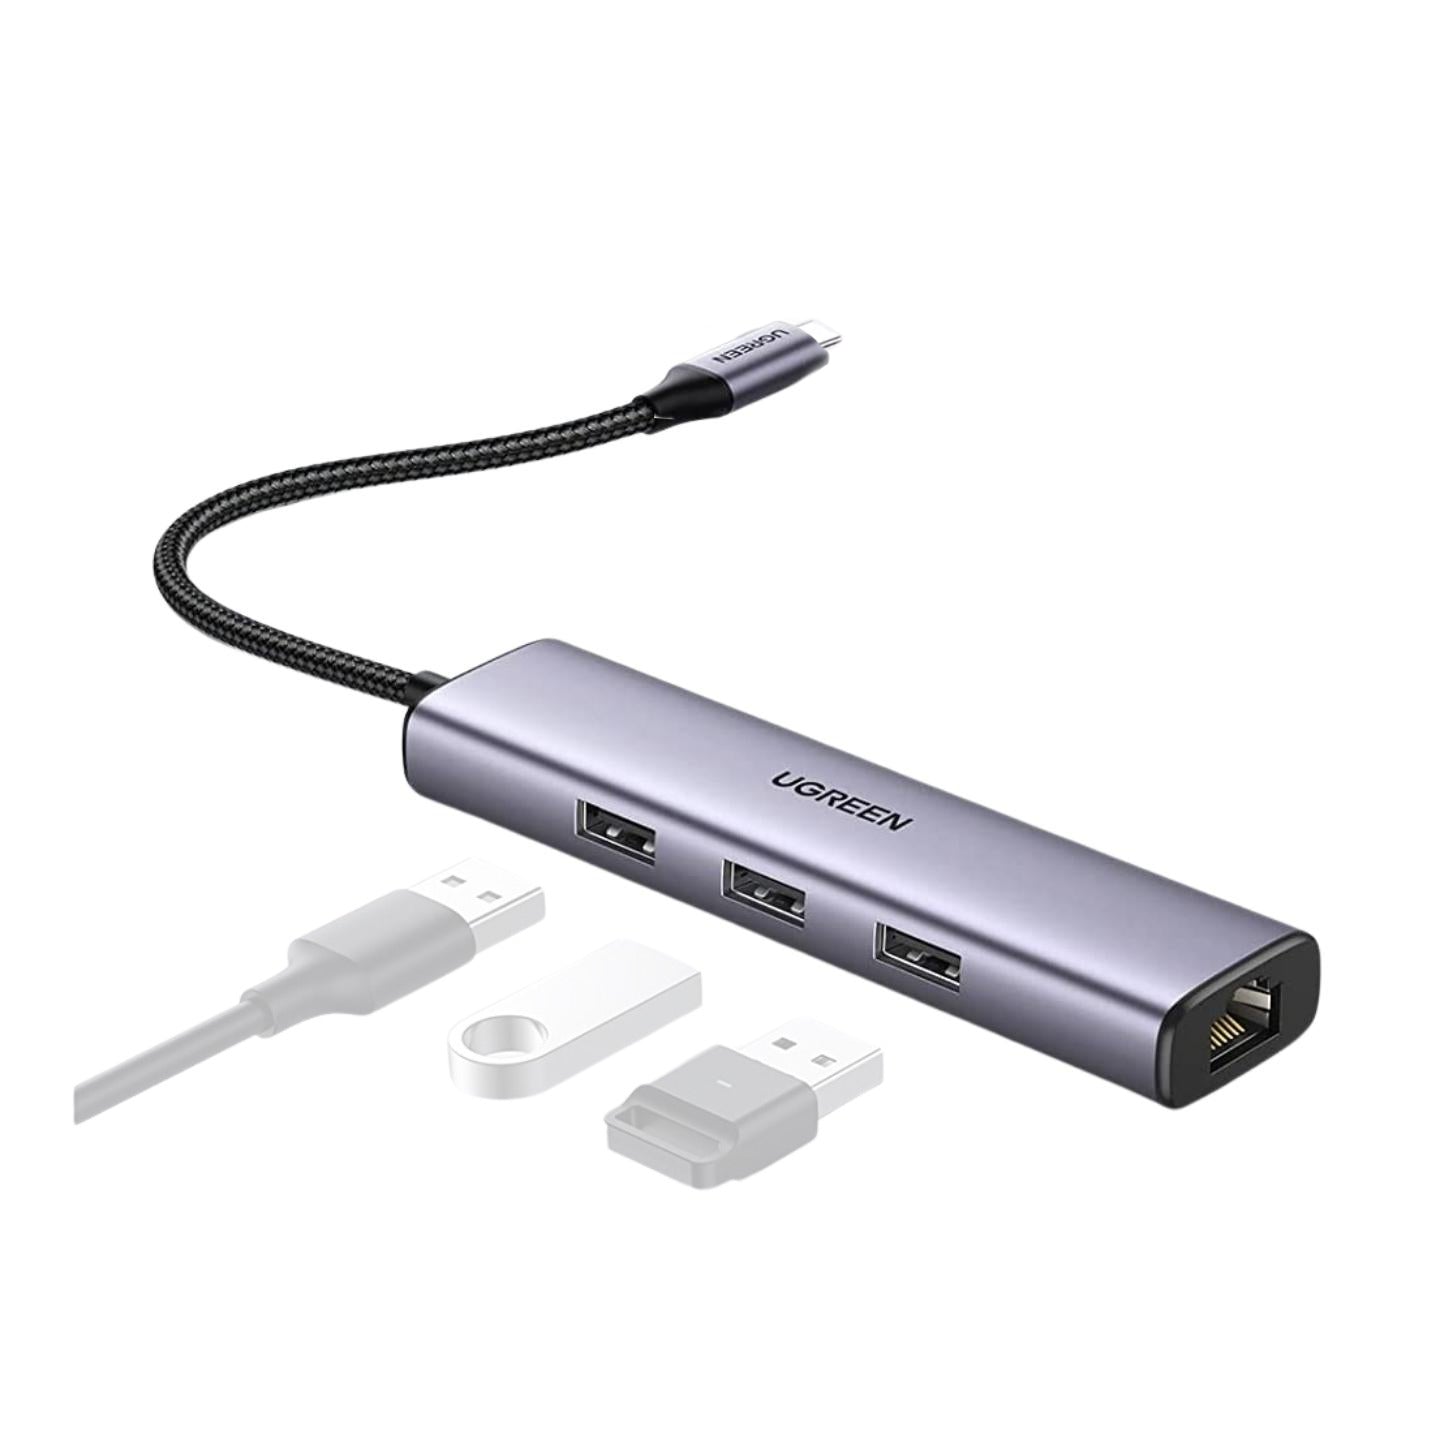 USB C Hub Ethernet, 5-in-1 lan Multiport Adapter